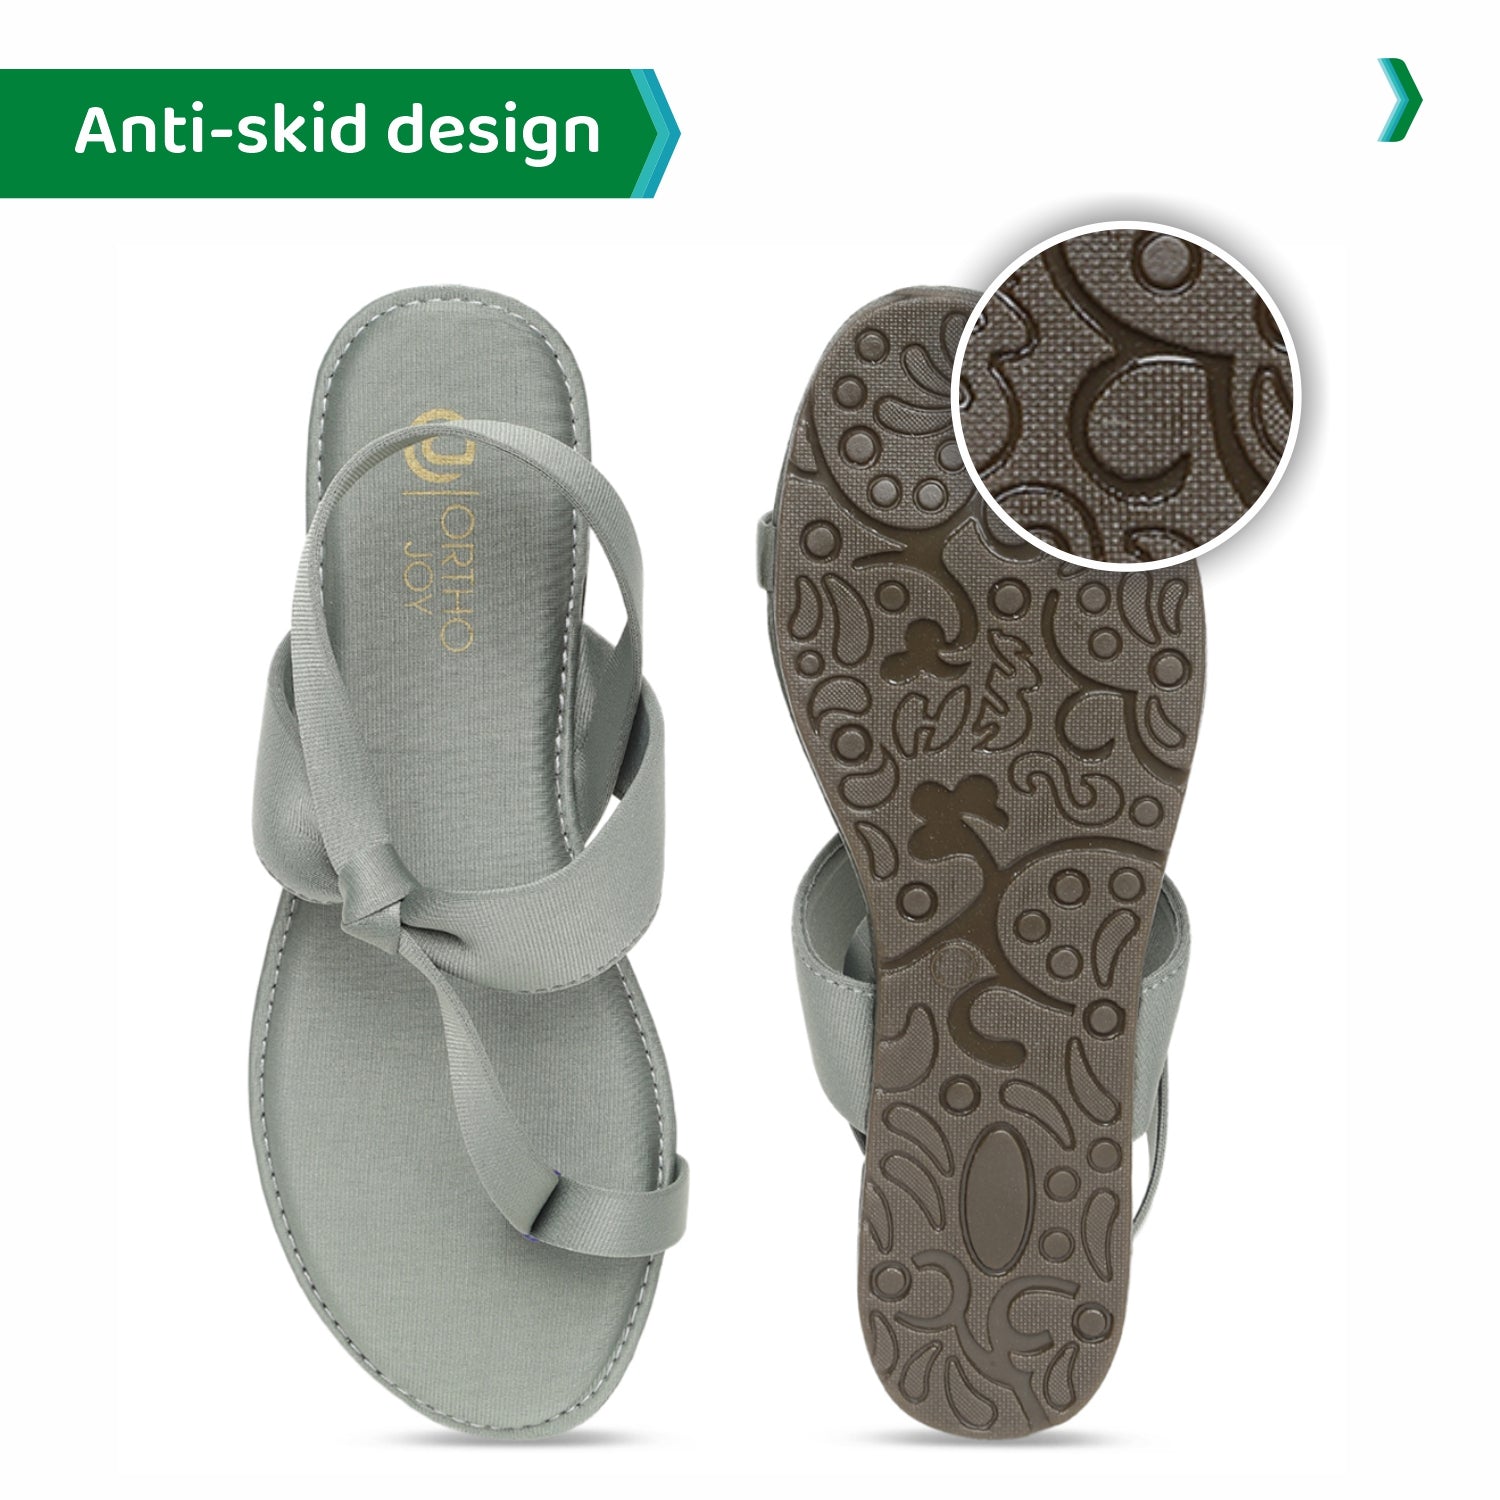 ORTHO JOY Fancy doctor Stylish Casual slippers for women